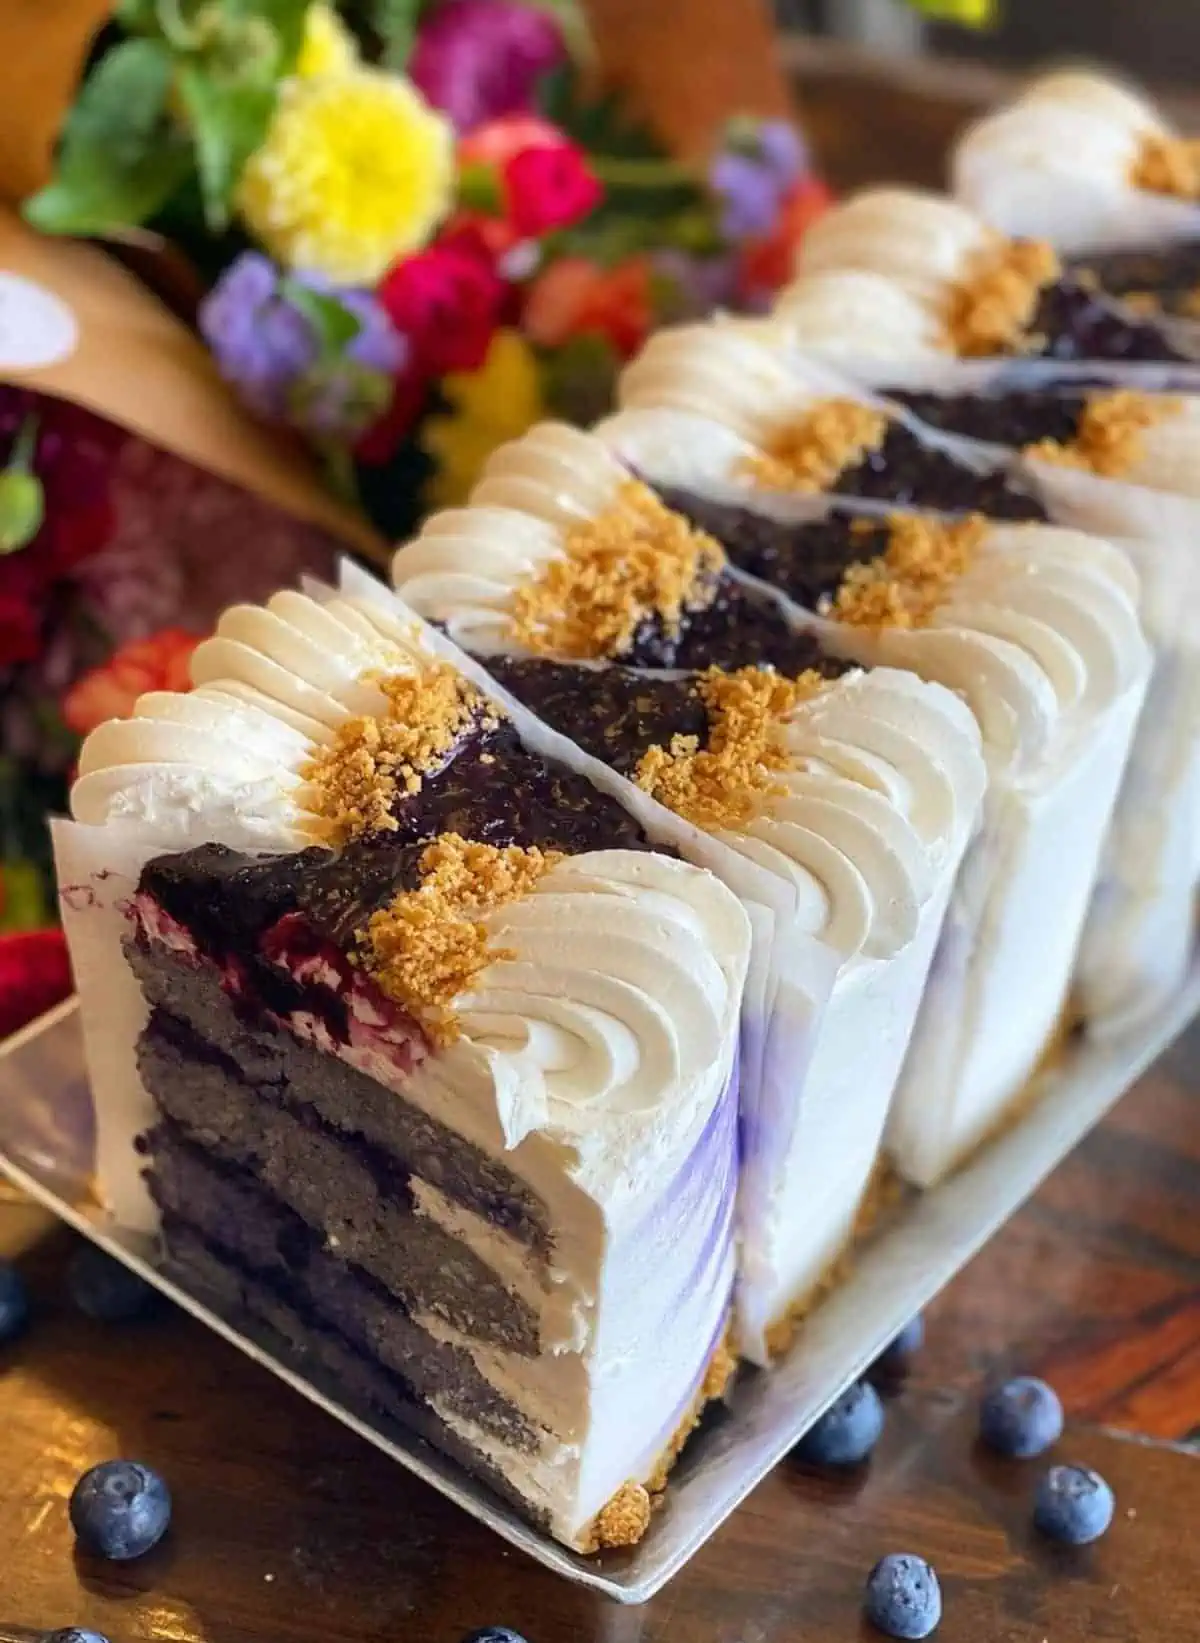 Vegan blueberry cheesecake slices from Valhalla Bakery.